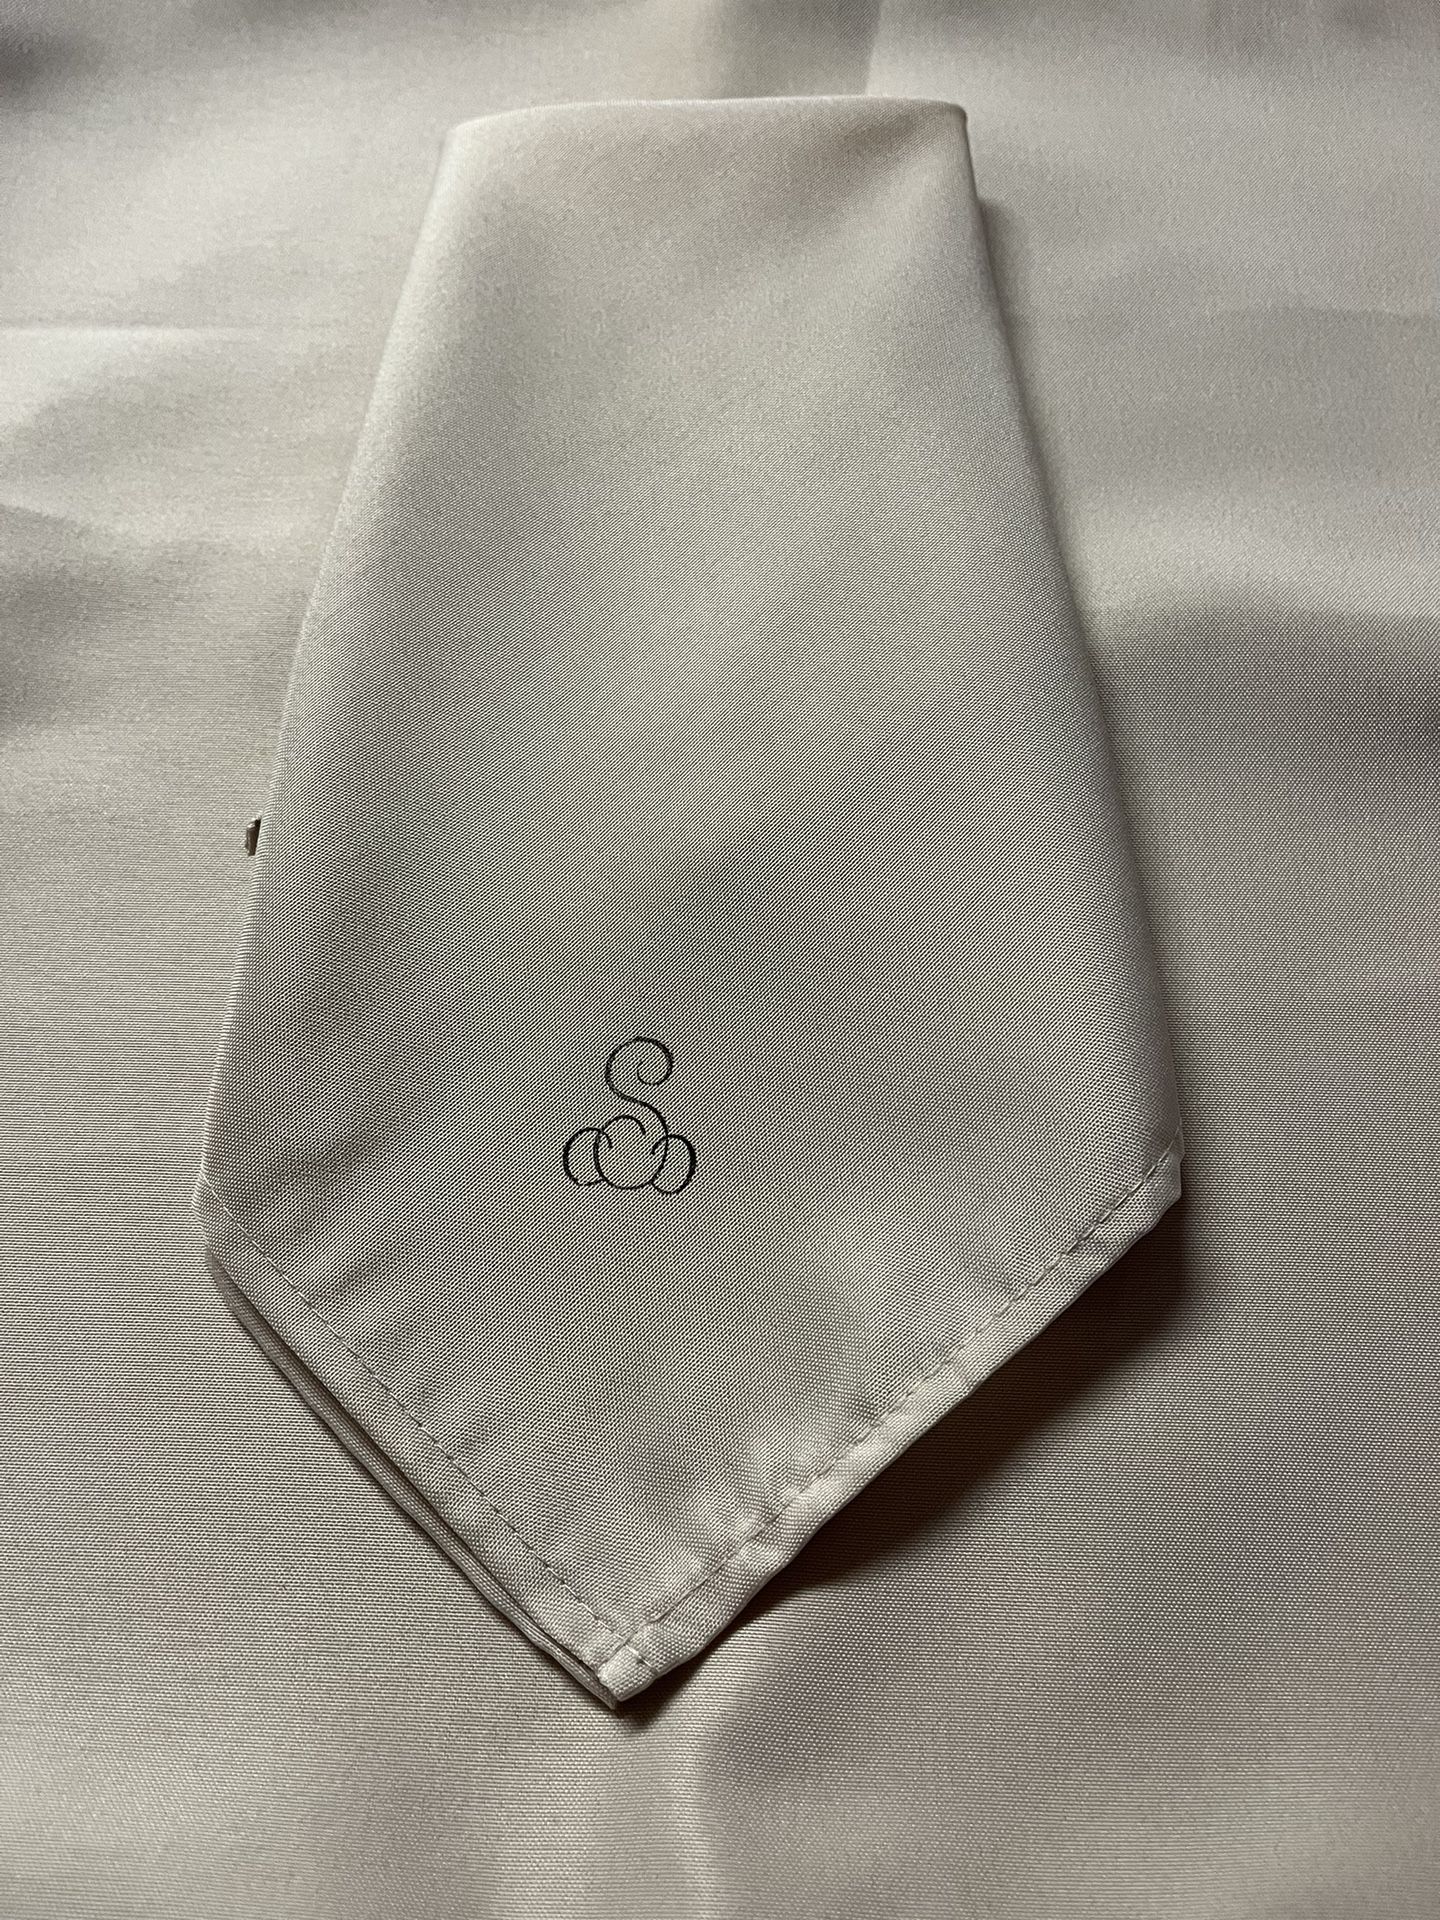 Monogrammed "S" napkins - New lot of 35